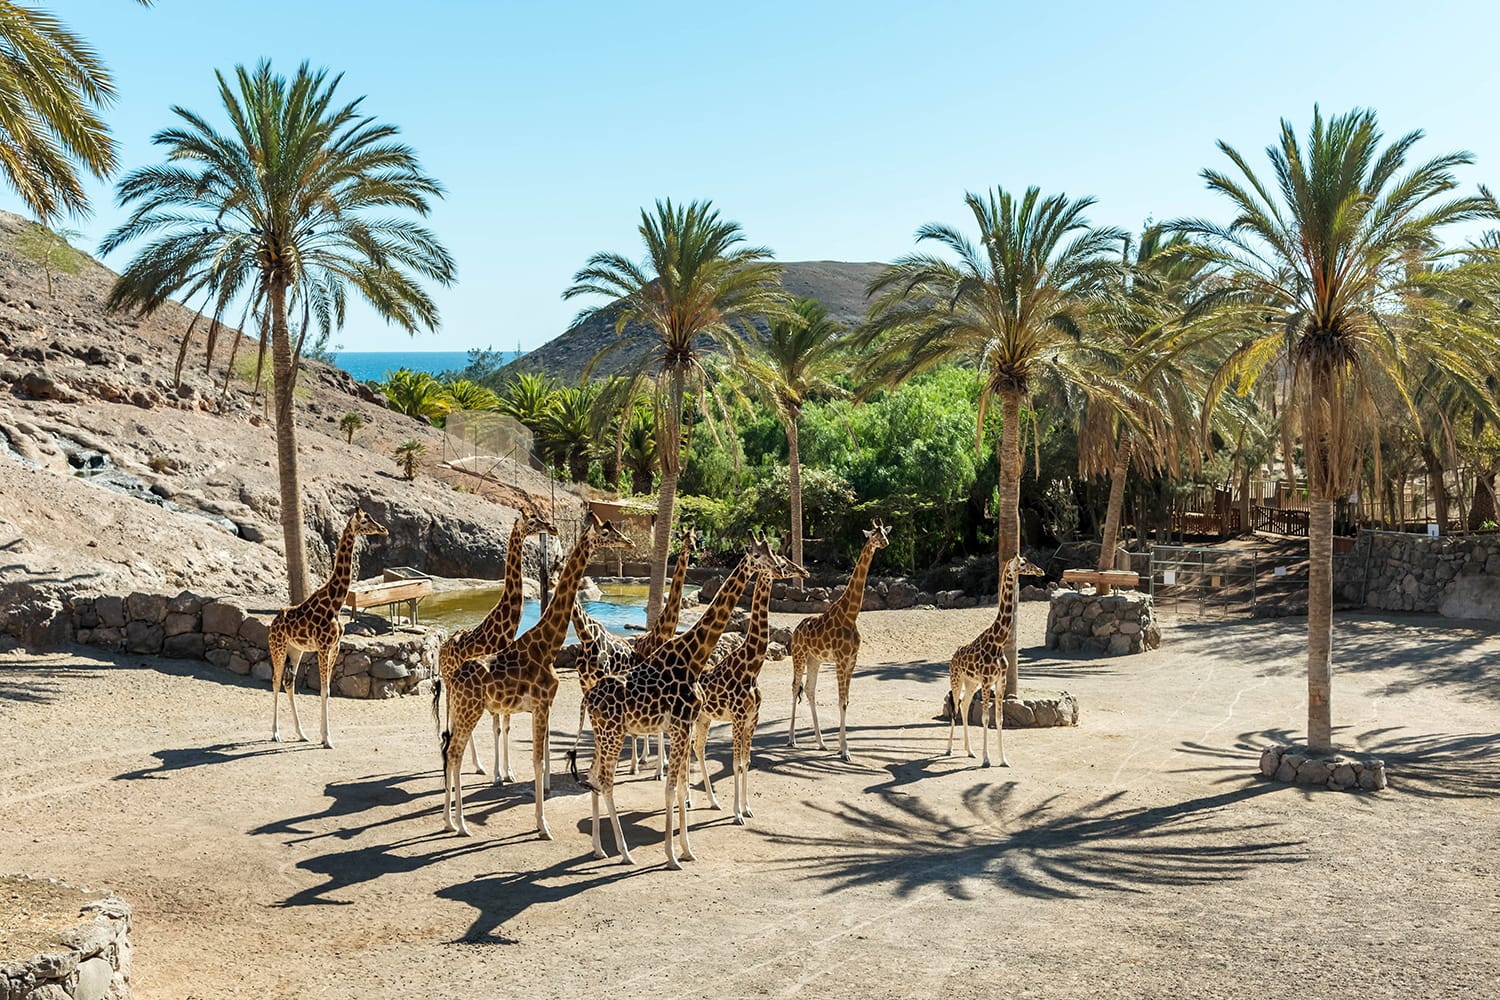 Giraffes at the Oasis Wildlife Park in Fuerteventura, Canary Islands, Spain